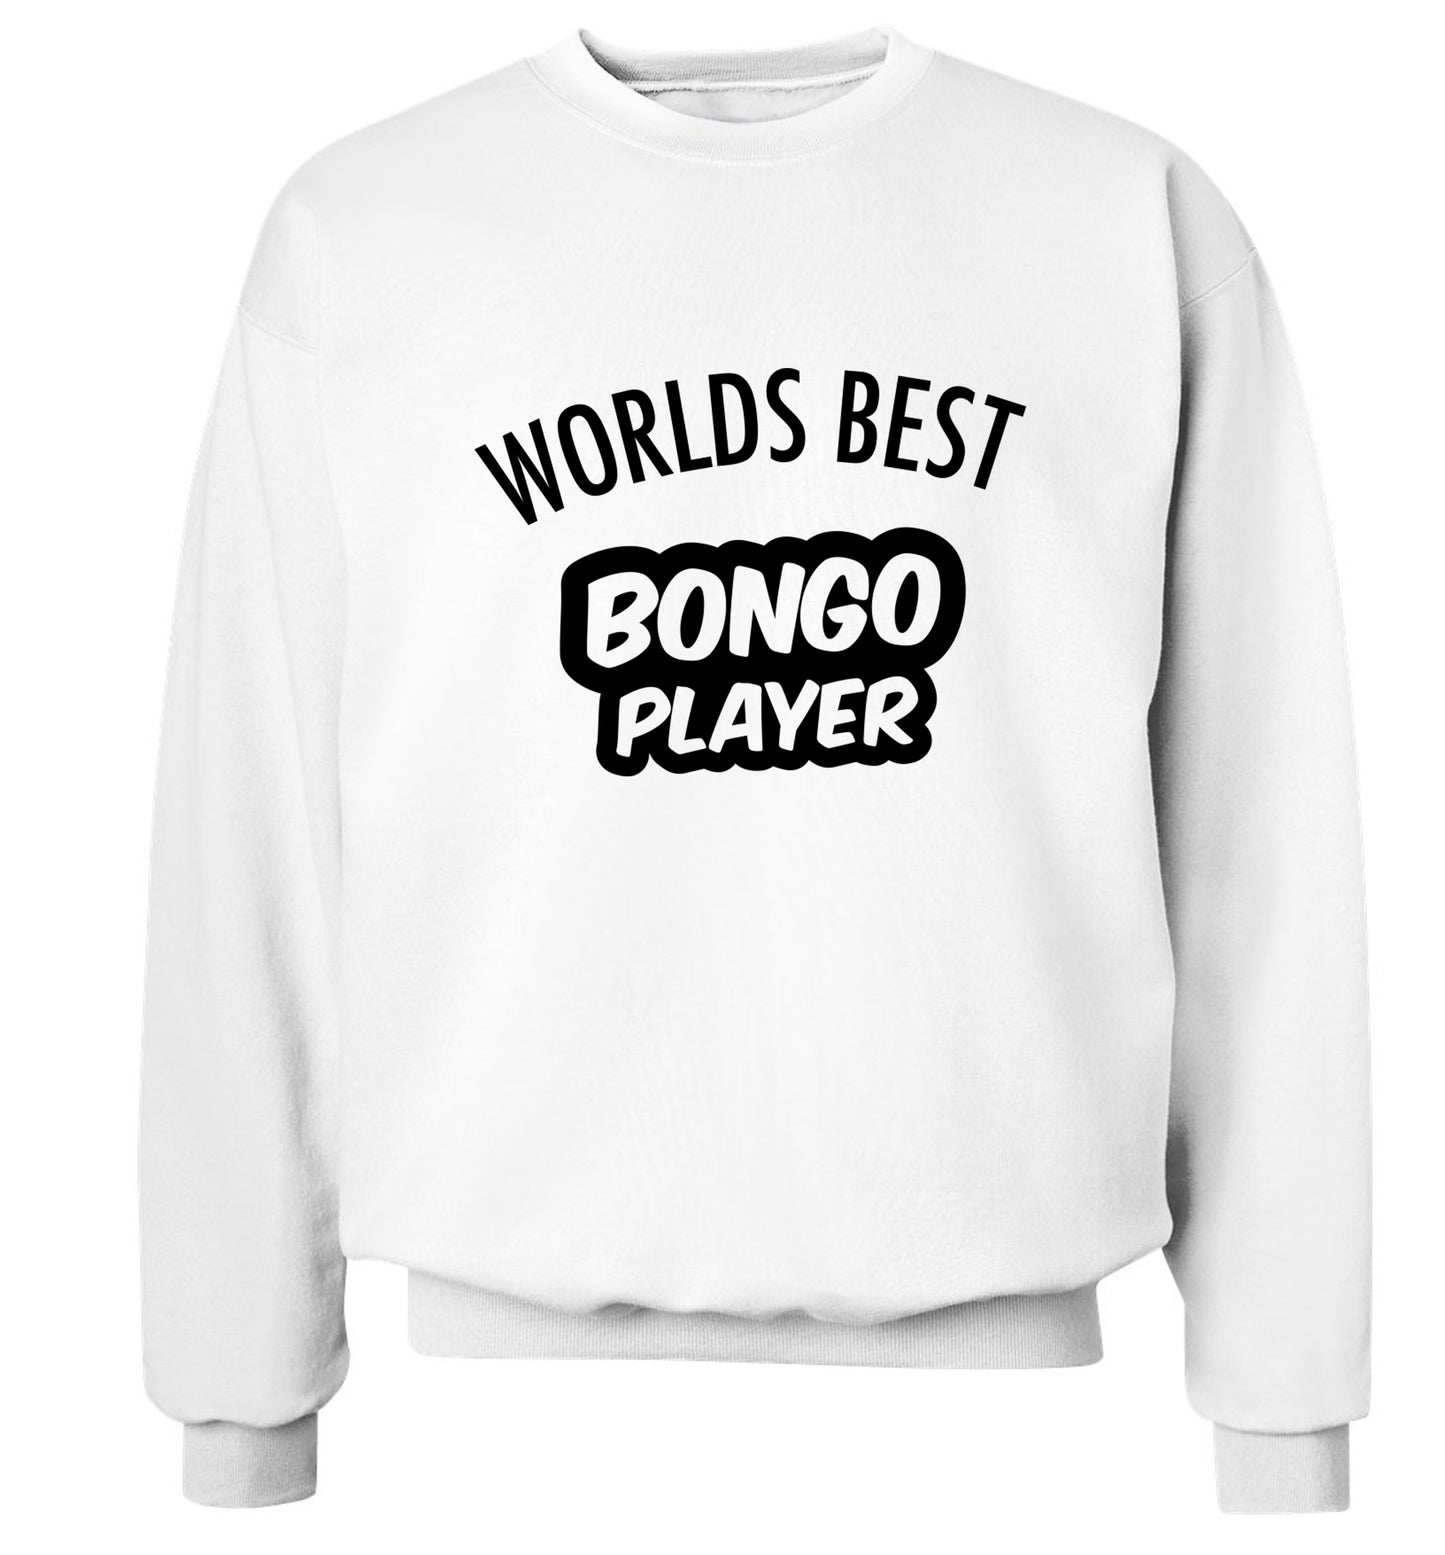 Worlds best bongo player Adult's unisex white Sweater 2XL